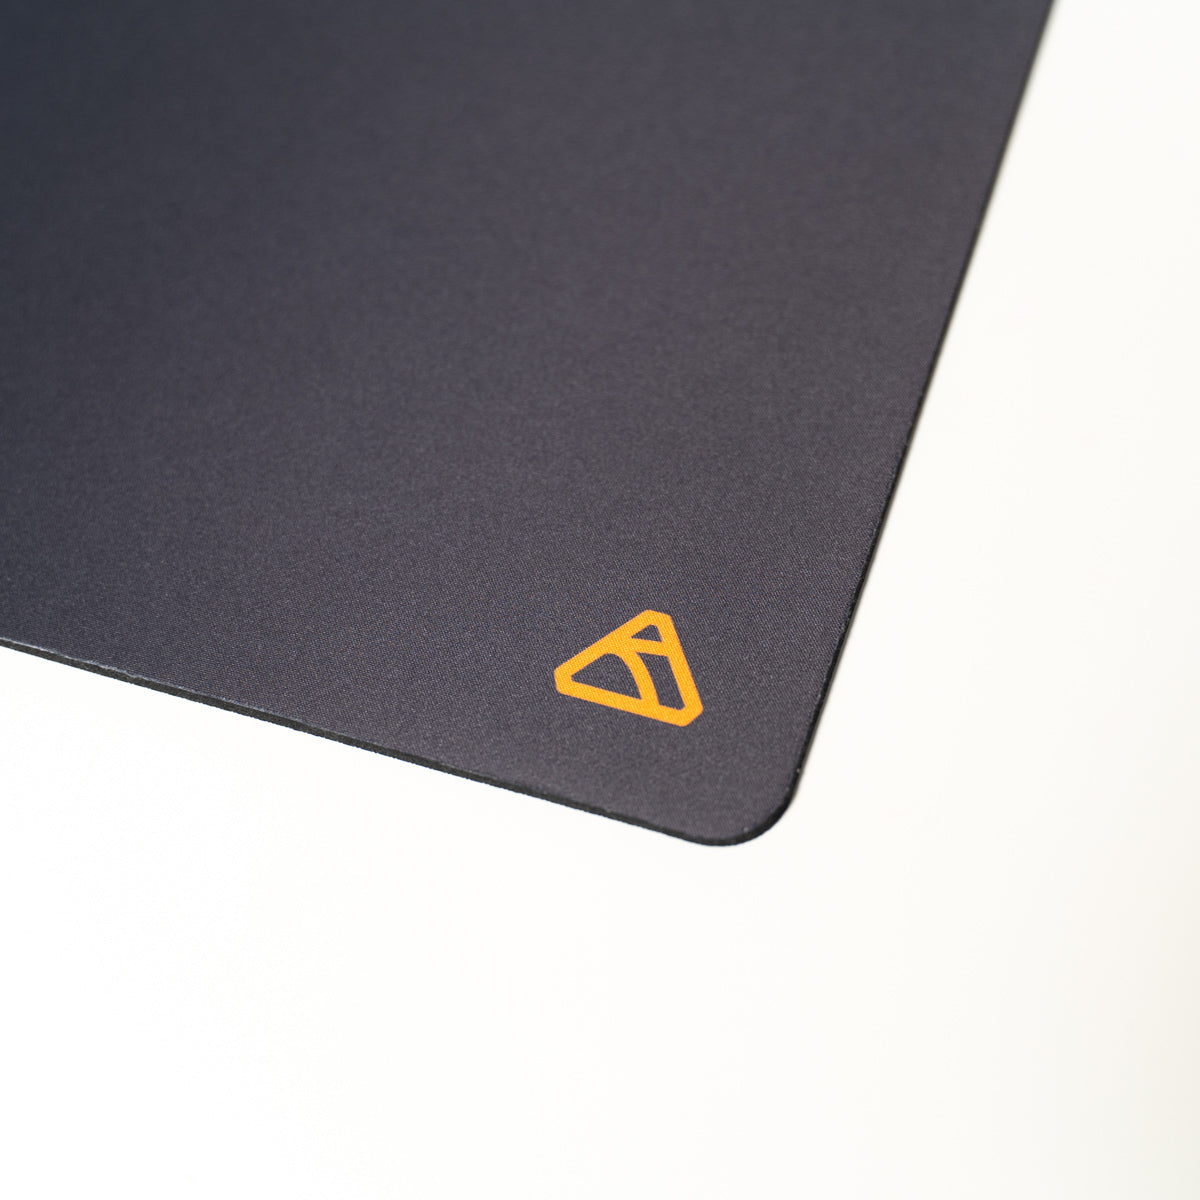 Gaming style cloth desk pad with Ryskape logo